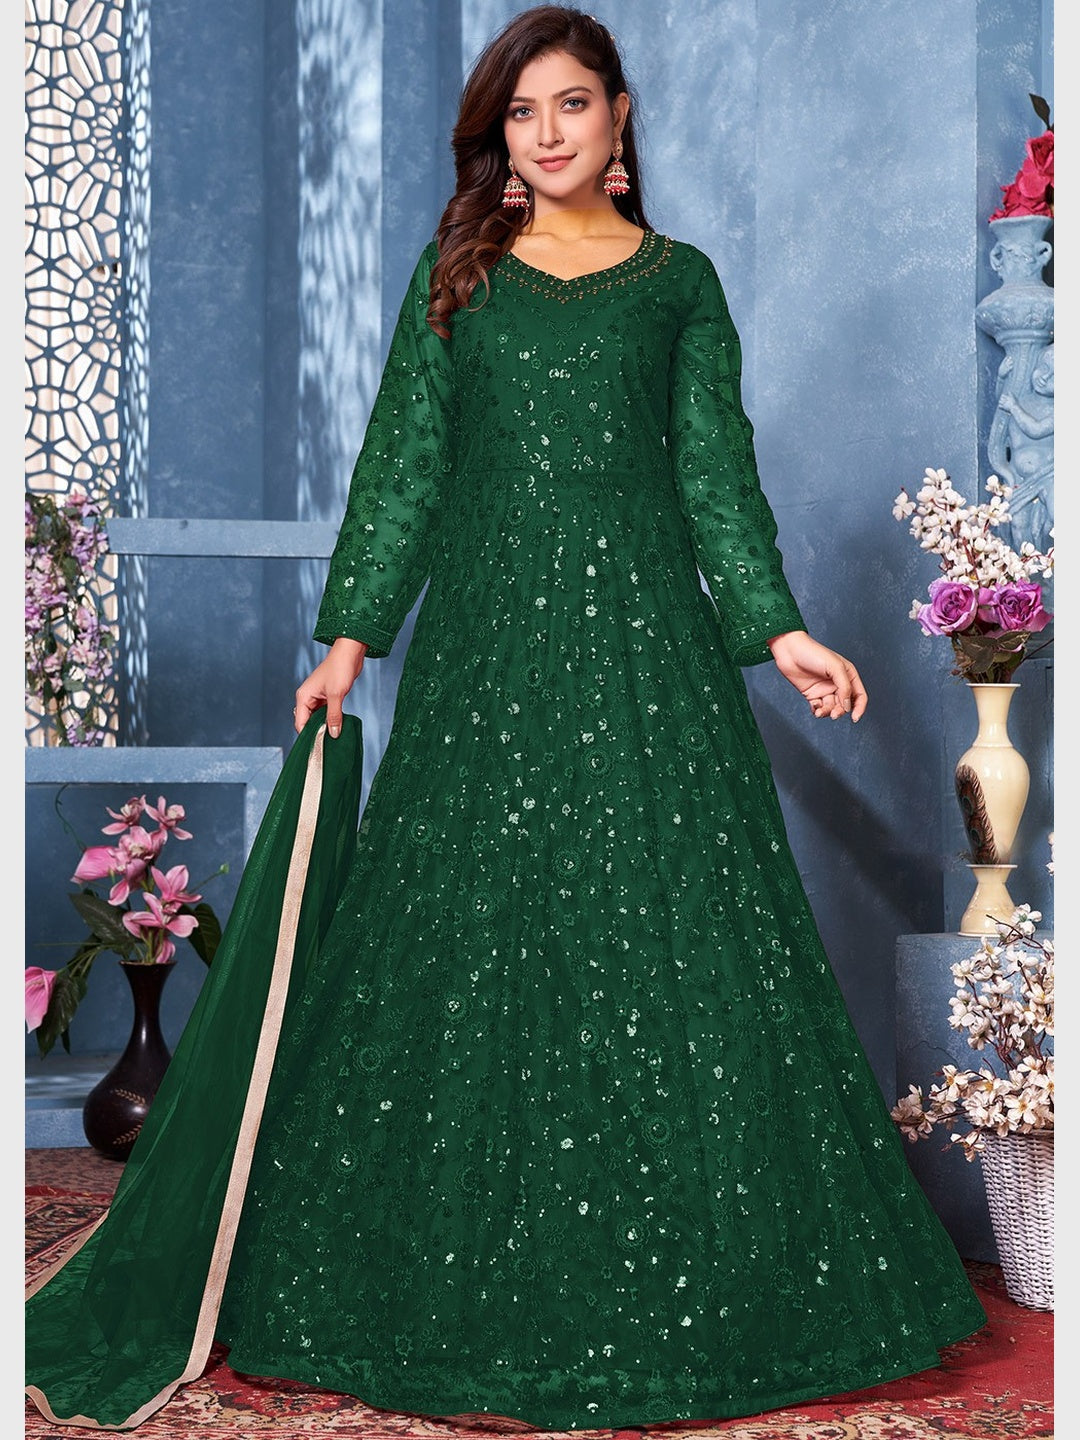 Dresses | Indian Dress Bottle Green Color Size M | Poshmark